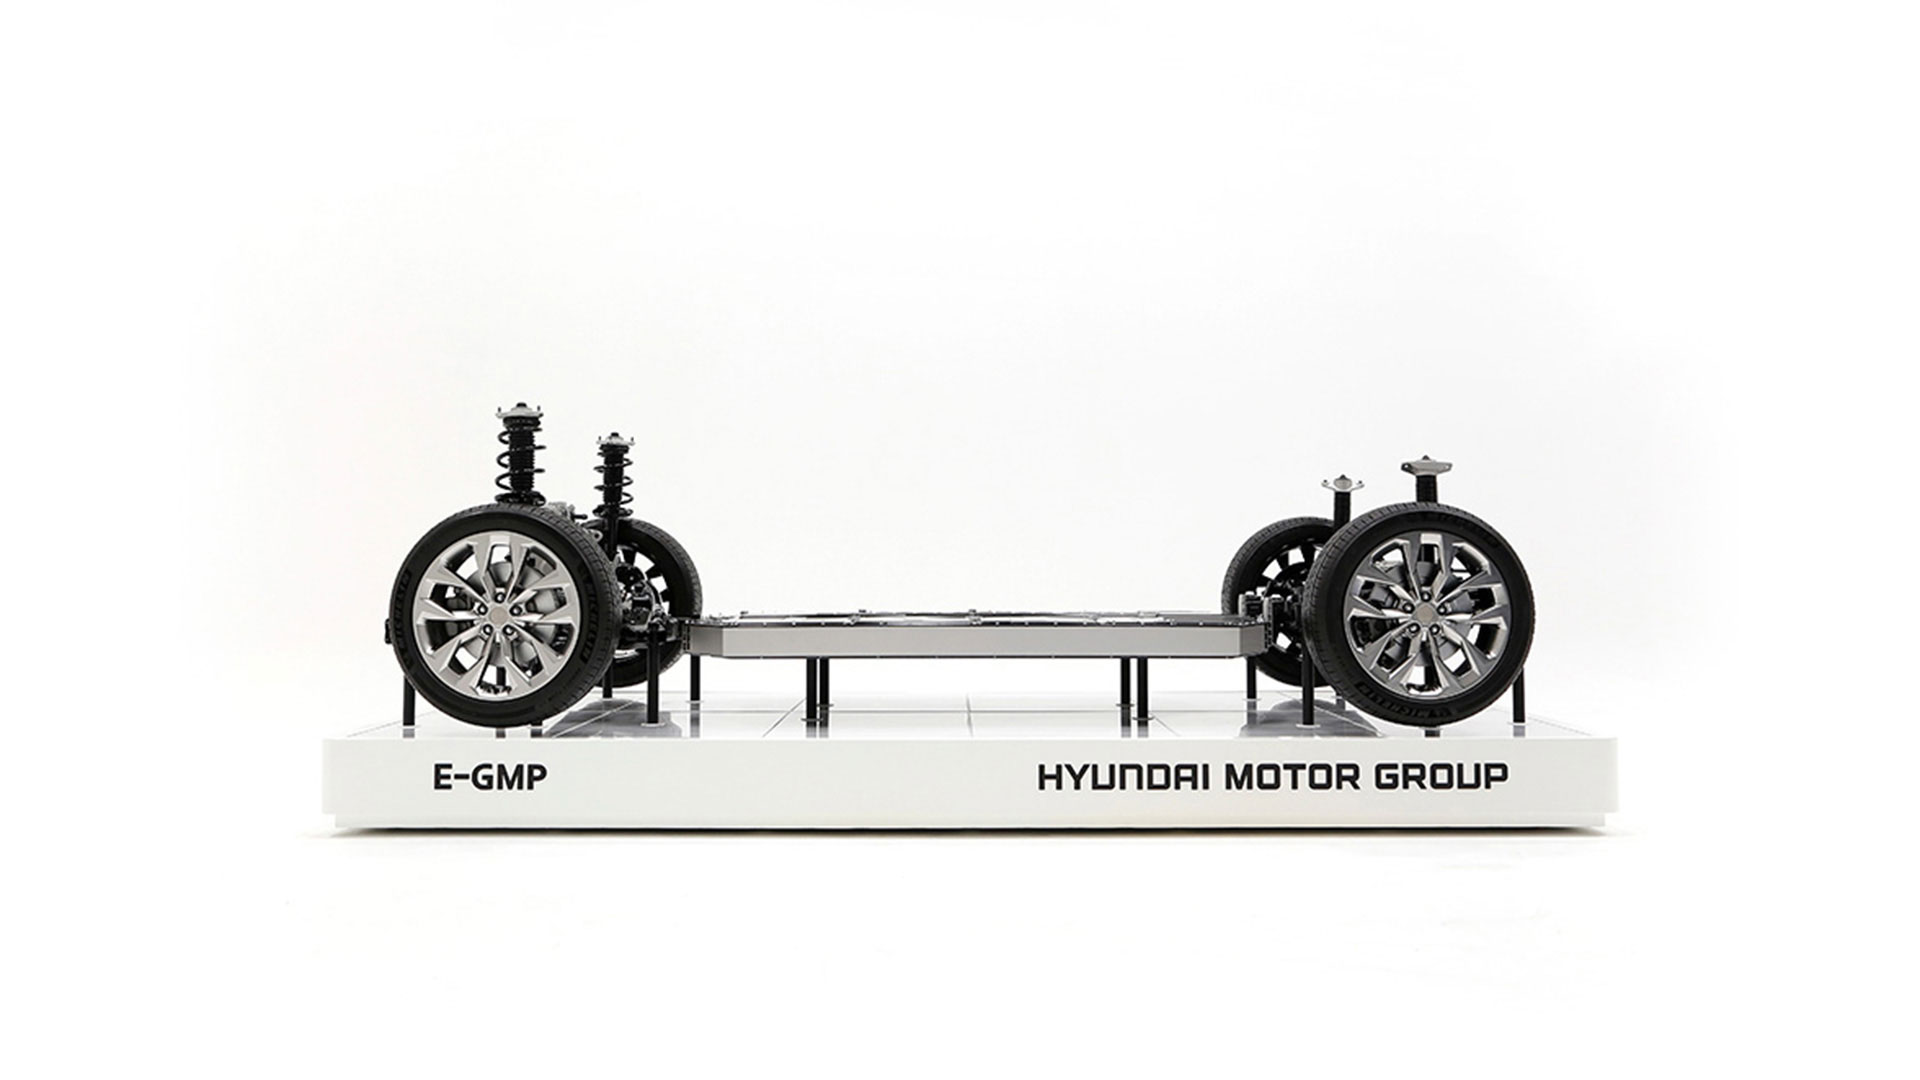 Hyundai Motor Group to Lead Charge into Electric Era with Dedicated EV Platform ‘E-GMP’